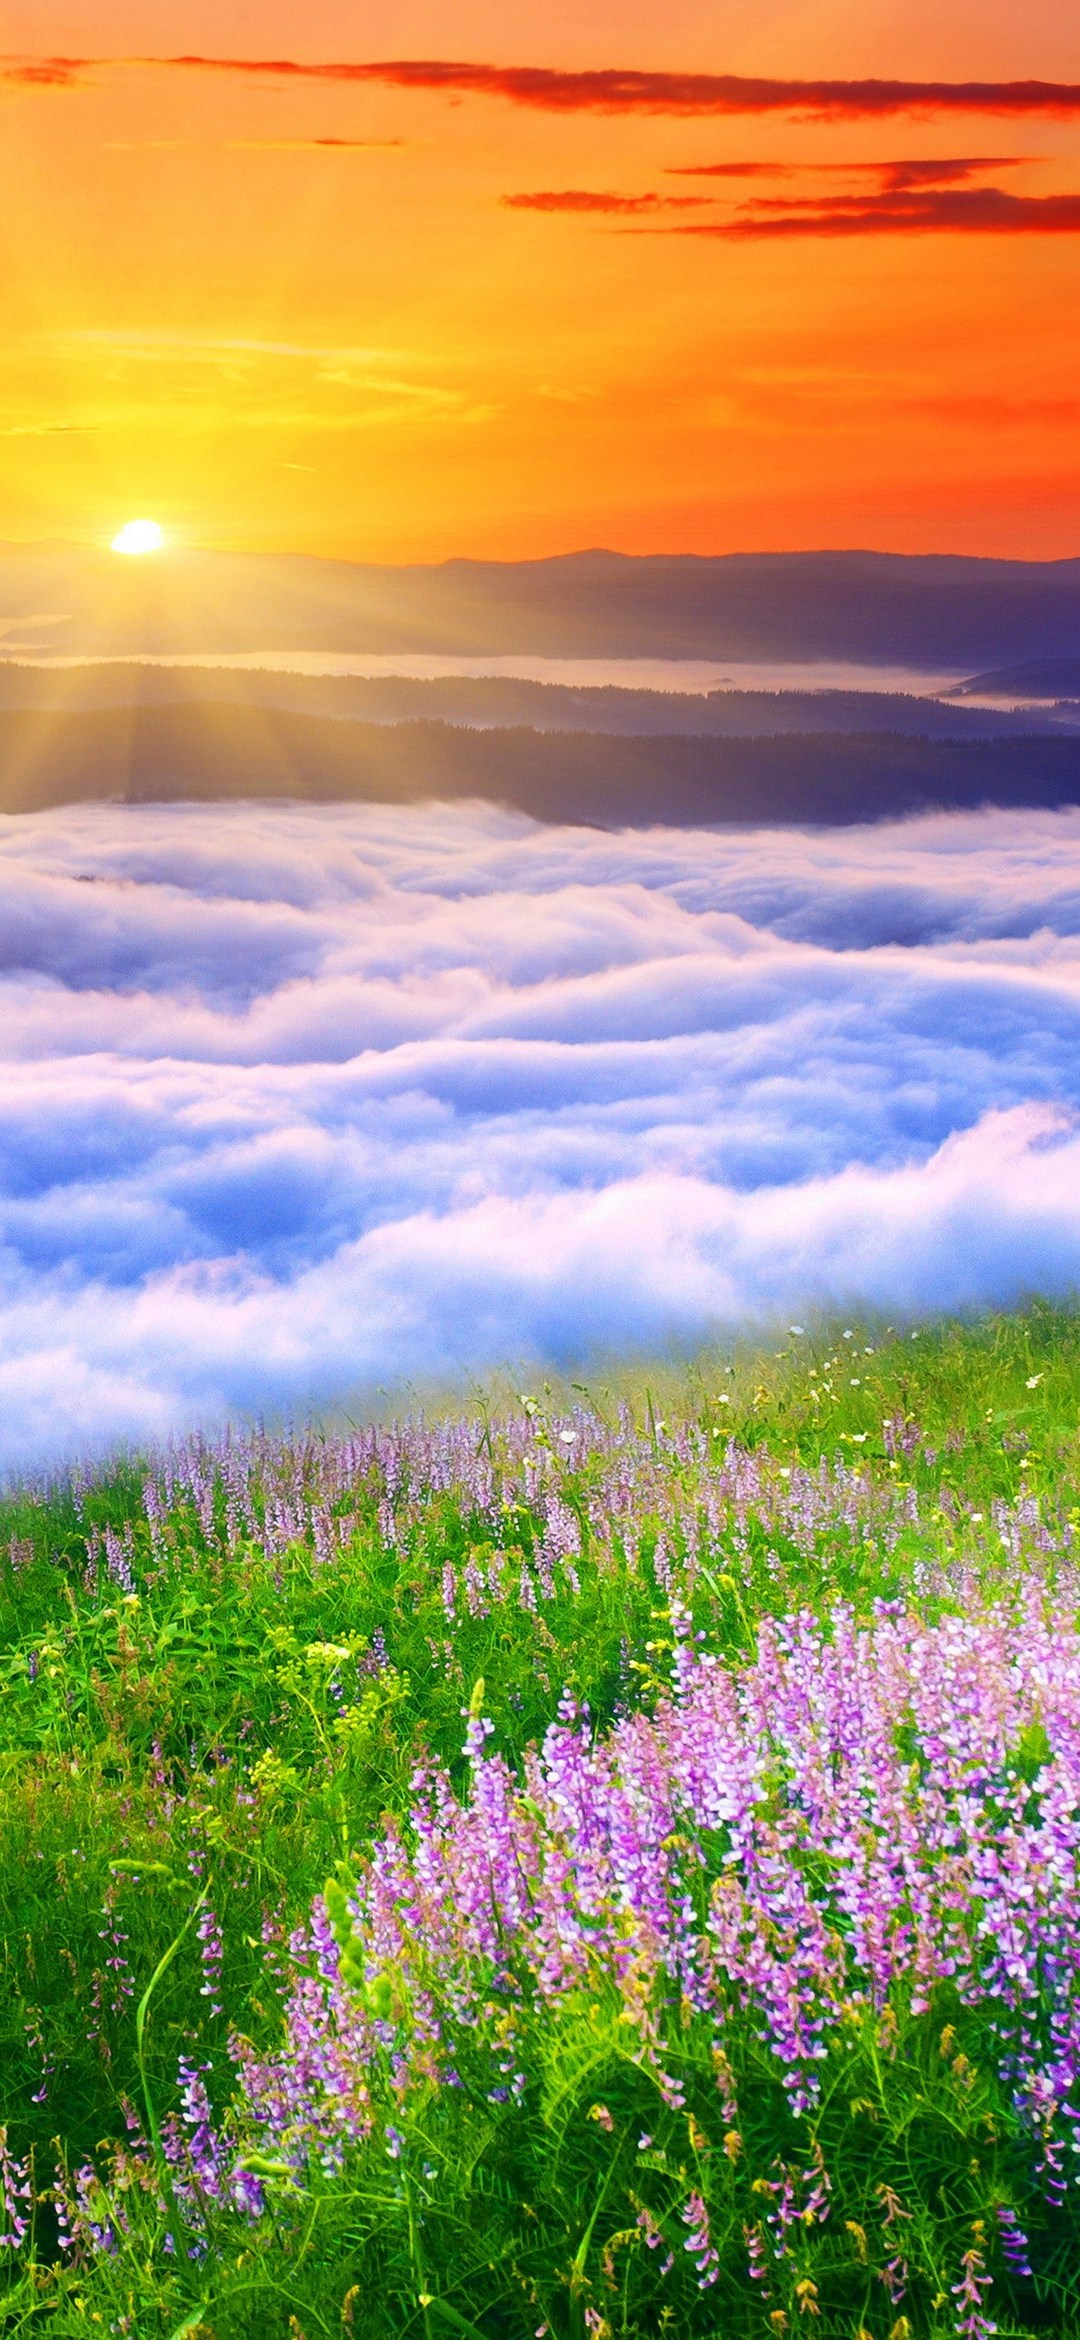 White Clouds And Sunset Purple Flowers Redmagic 5 Android スマホ壁紙 待ち受け スマラン